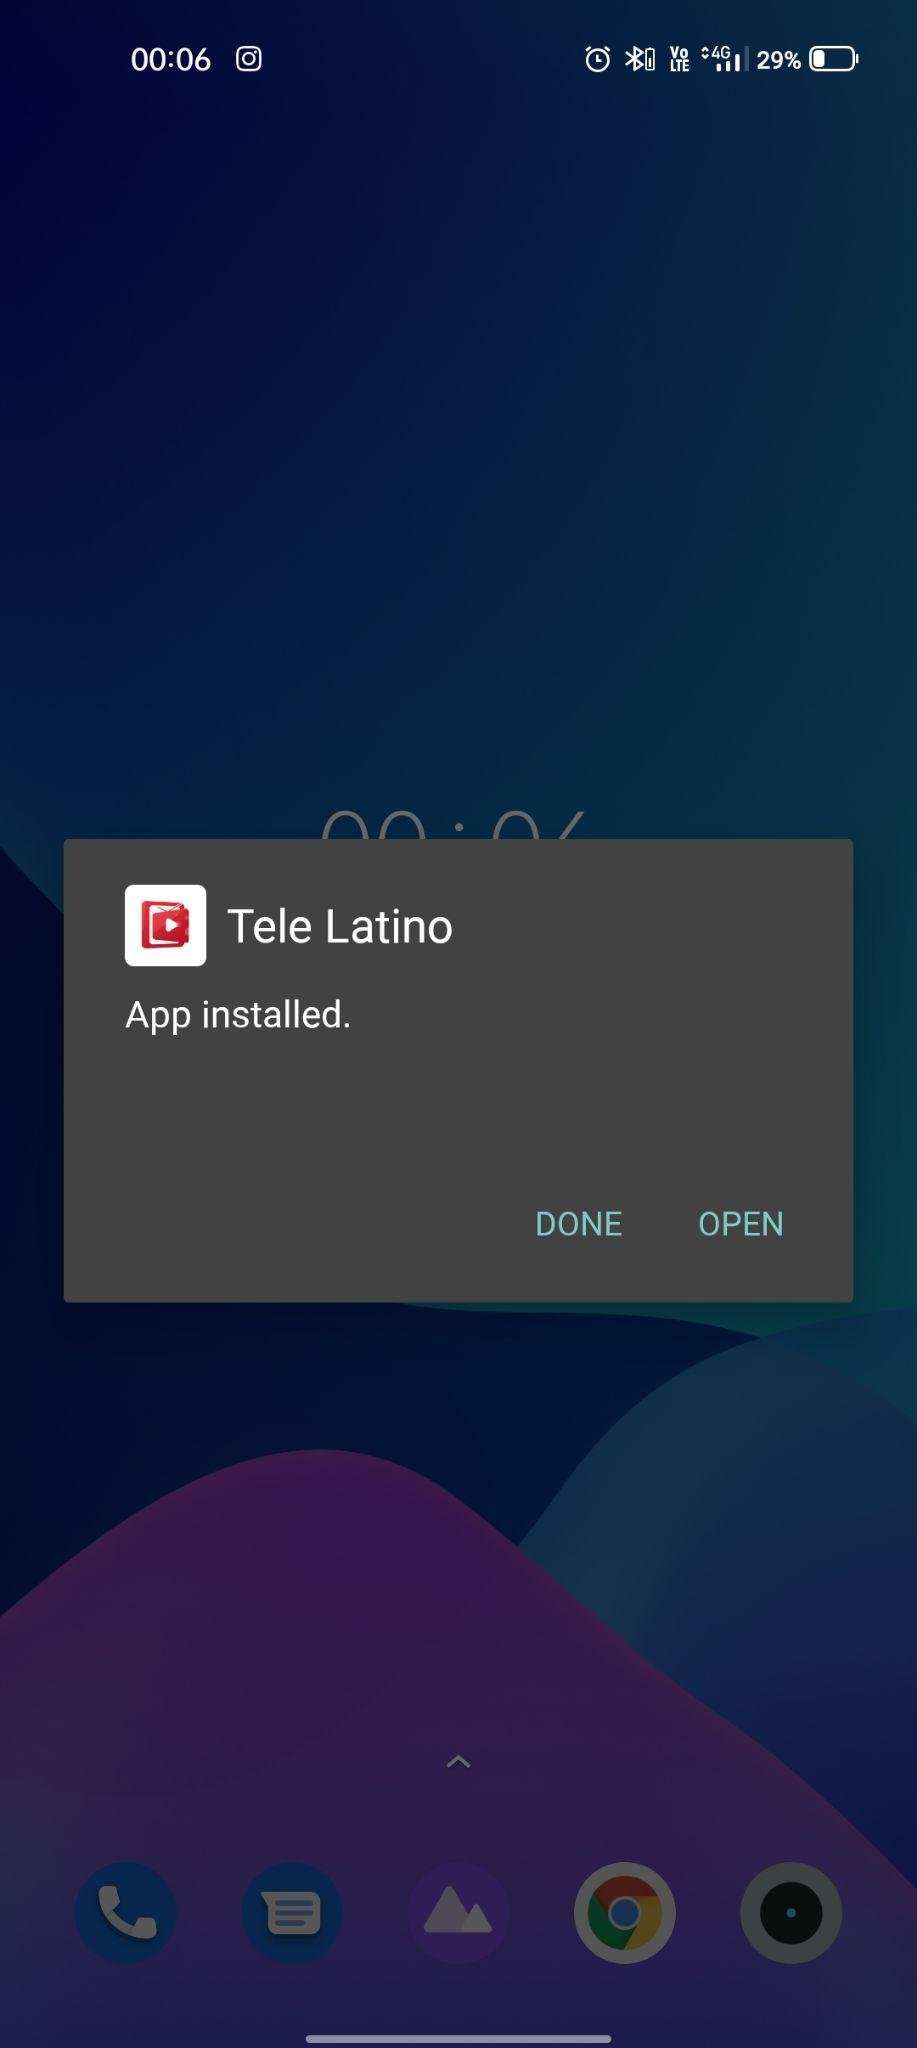 tele latino apk installed